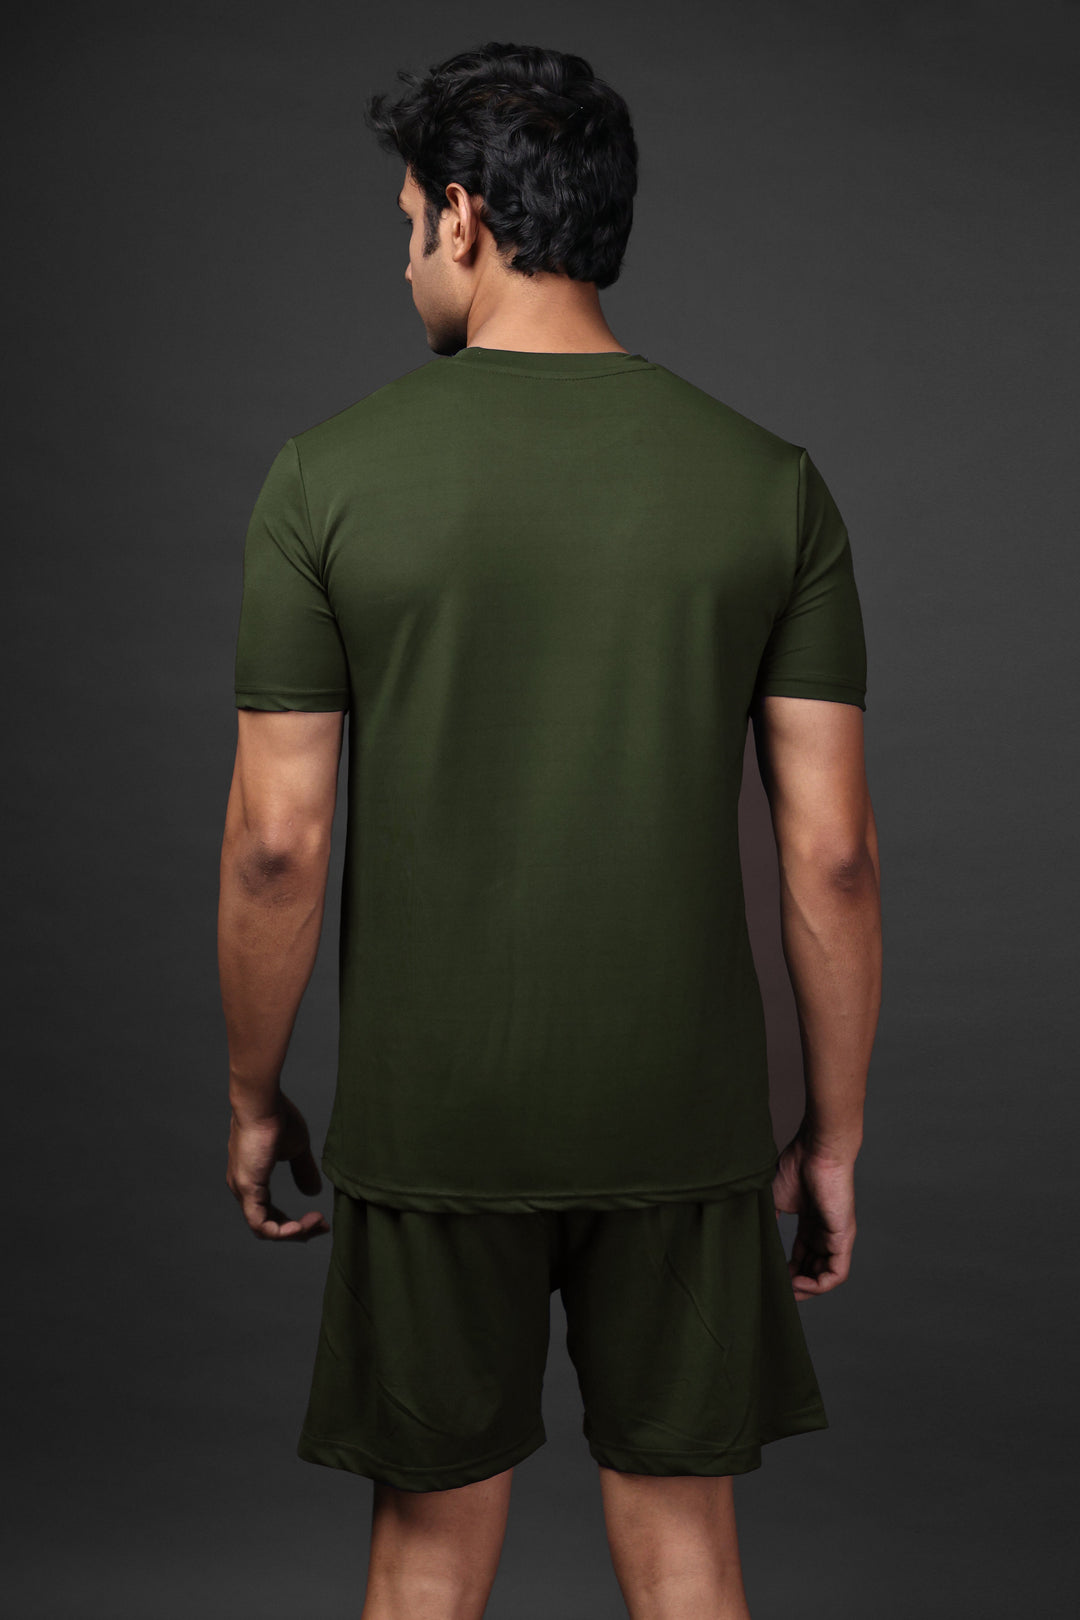 Active-Wear Co-Ord Set - Olive Tee & Shorts Basic Co-ord Set#4